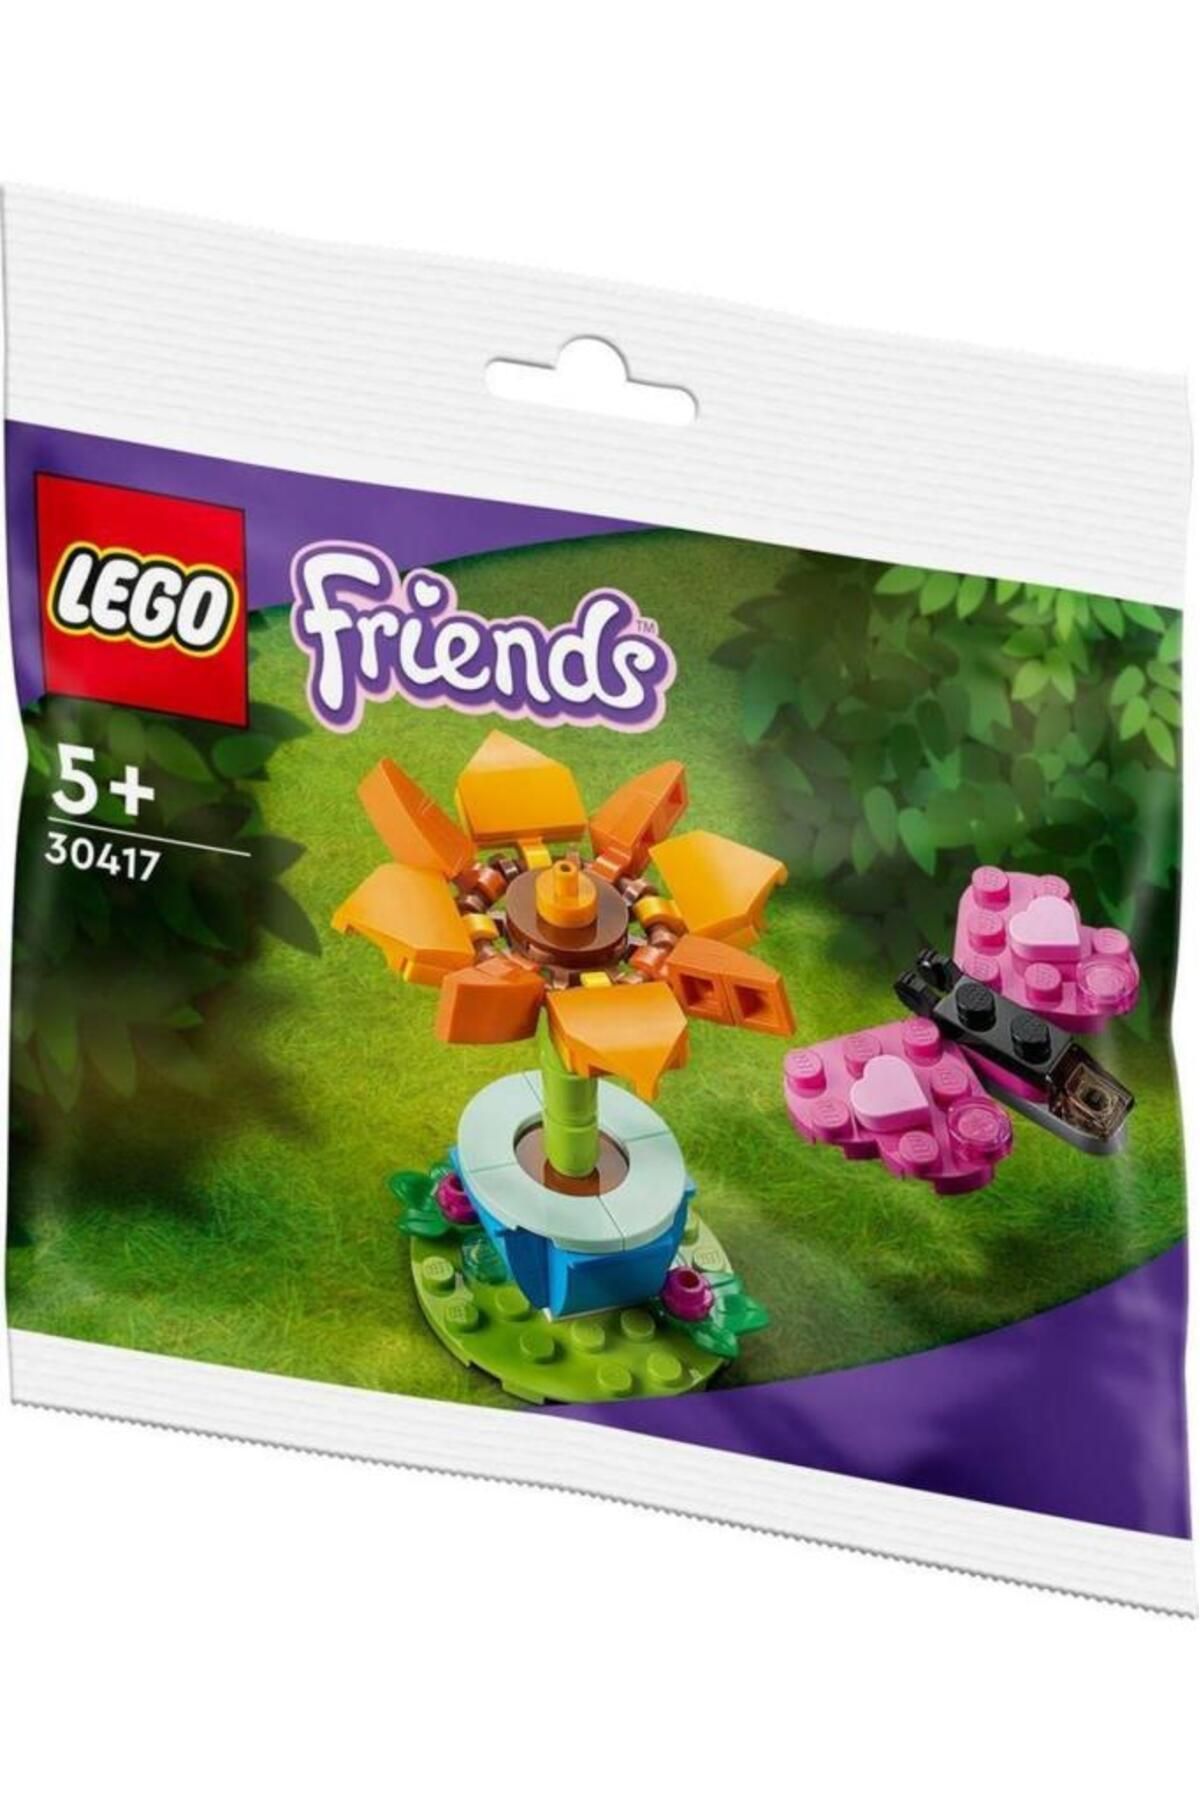 LEGO Friends 30417 Garden Flower And Butterfly